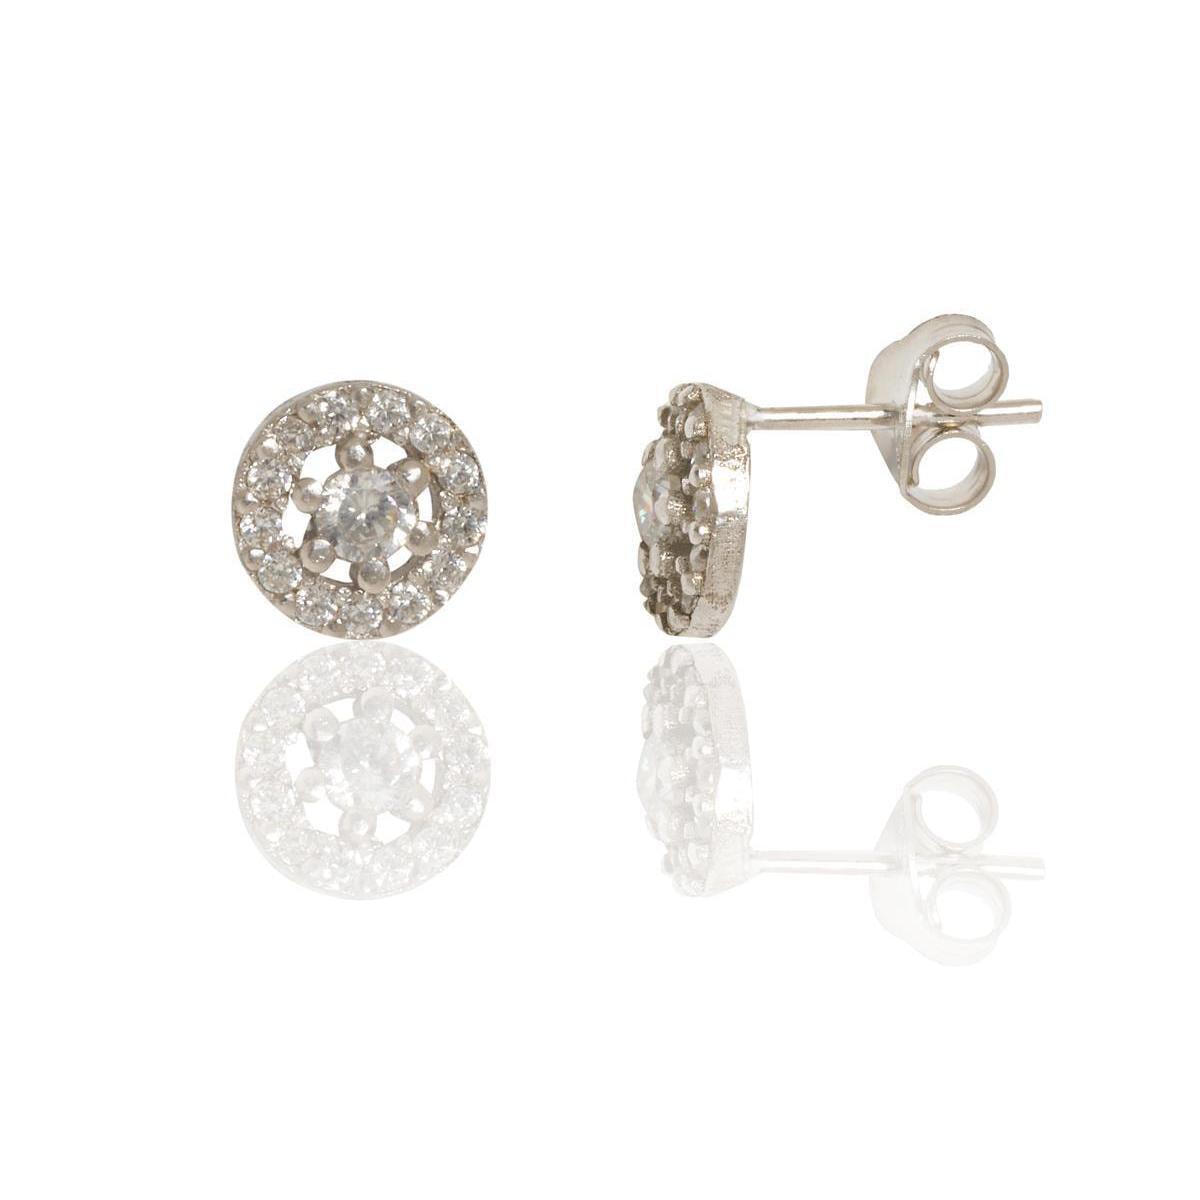 Cubic Zirconia Solitaire Earrings • Best Diamond Solitaire Earrings - Trending Silver Gifts